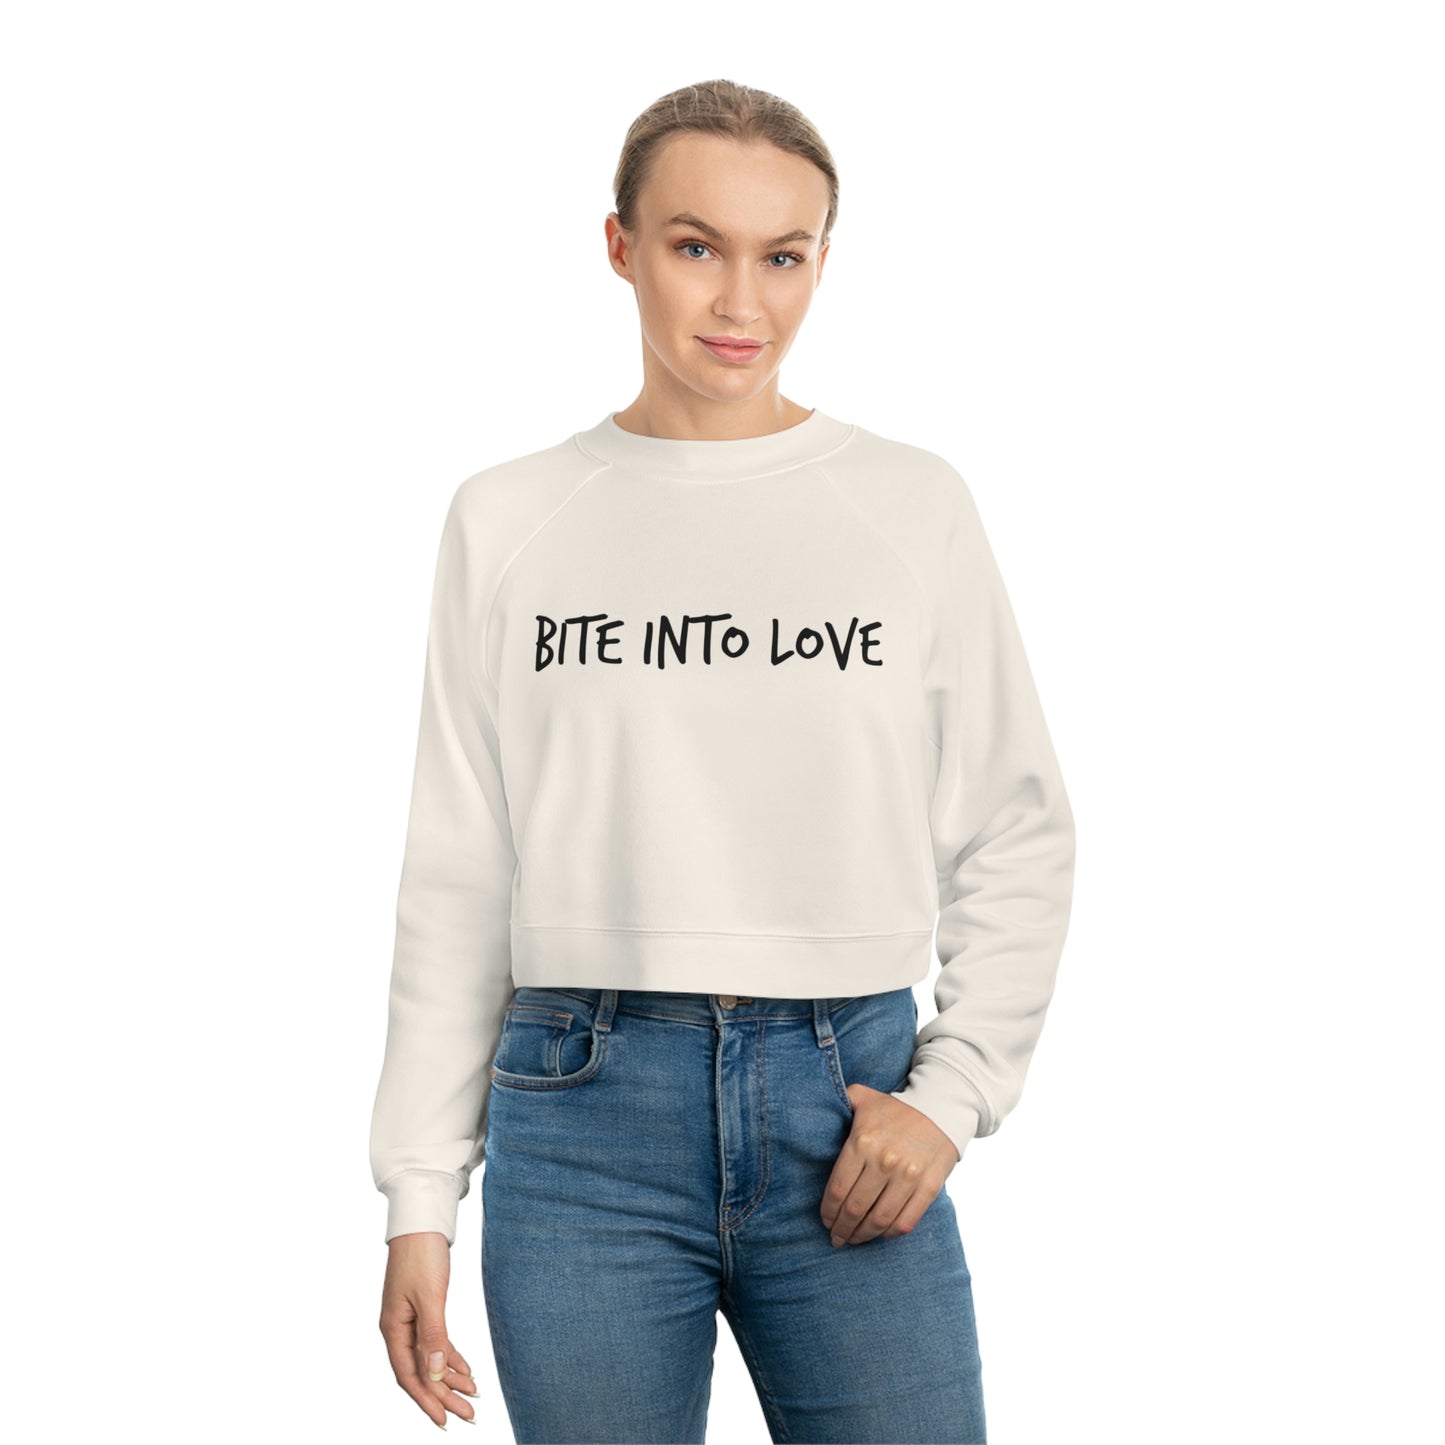 BITE INTO LOVE - Women's Cropped Fleece Pullover